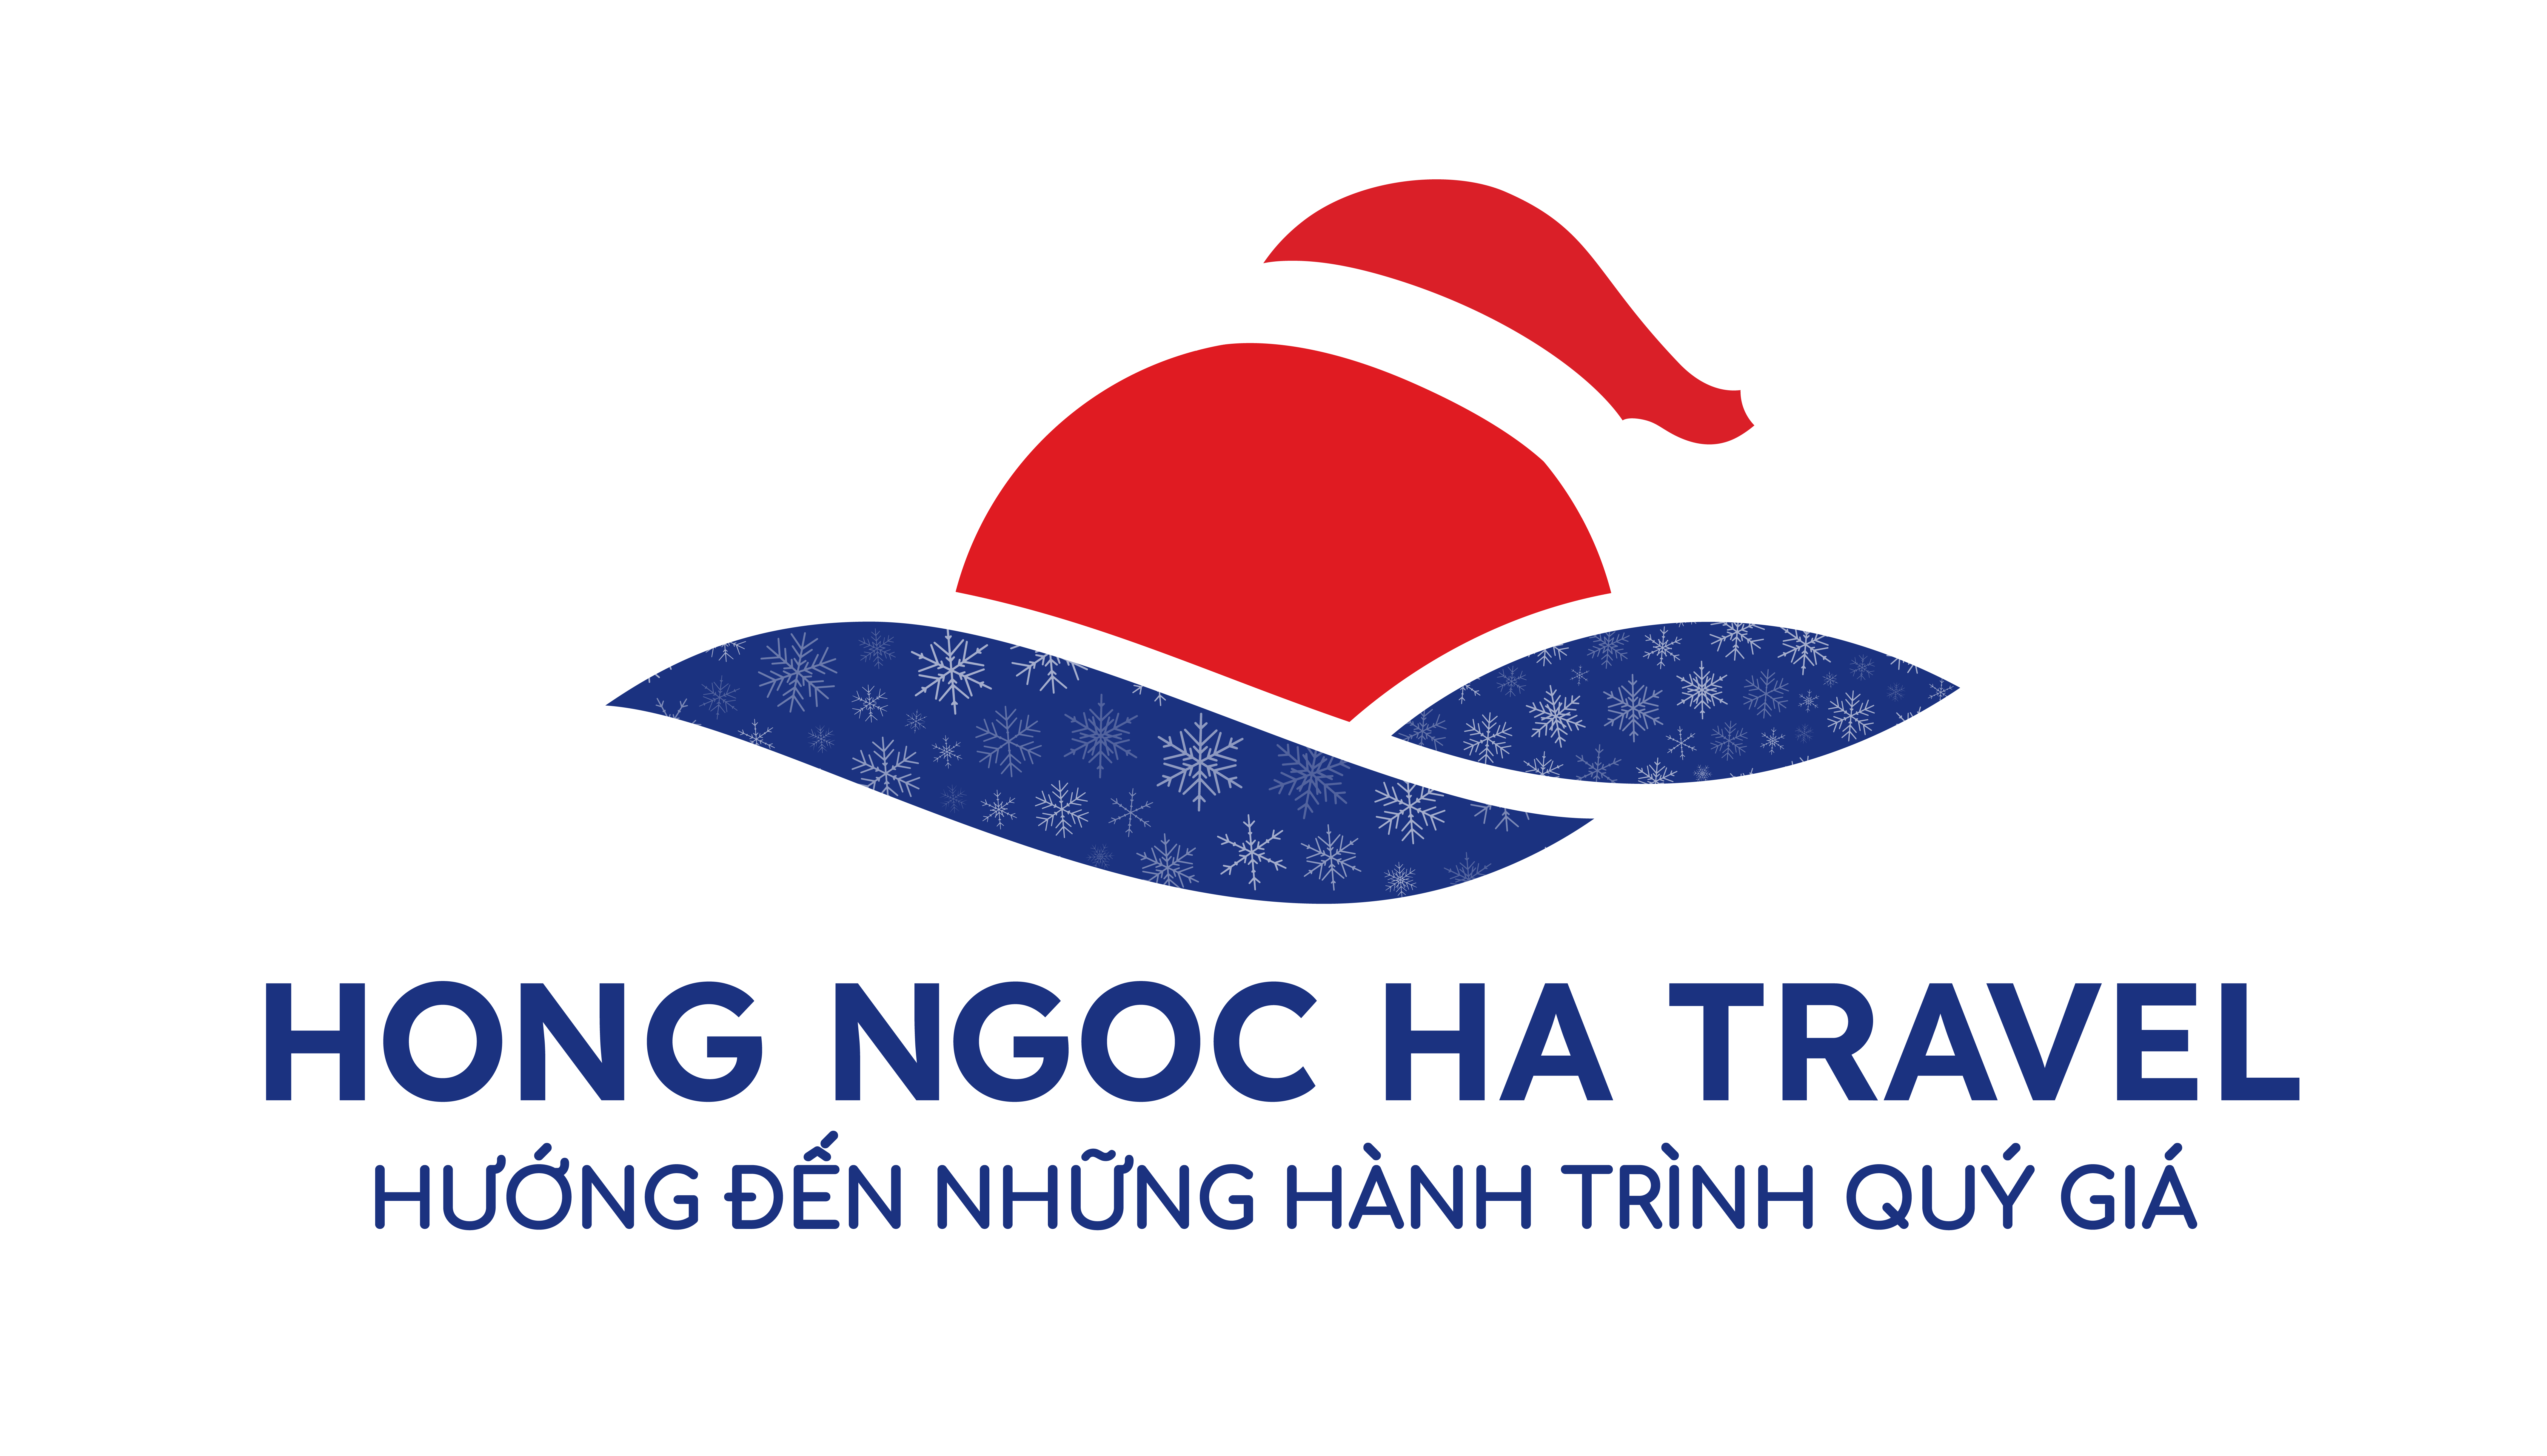 Hong Ngoc Ha Travel